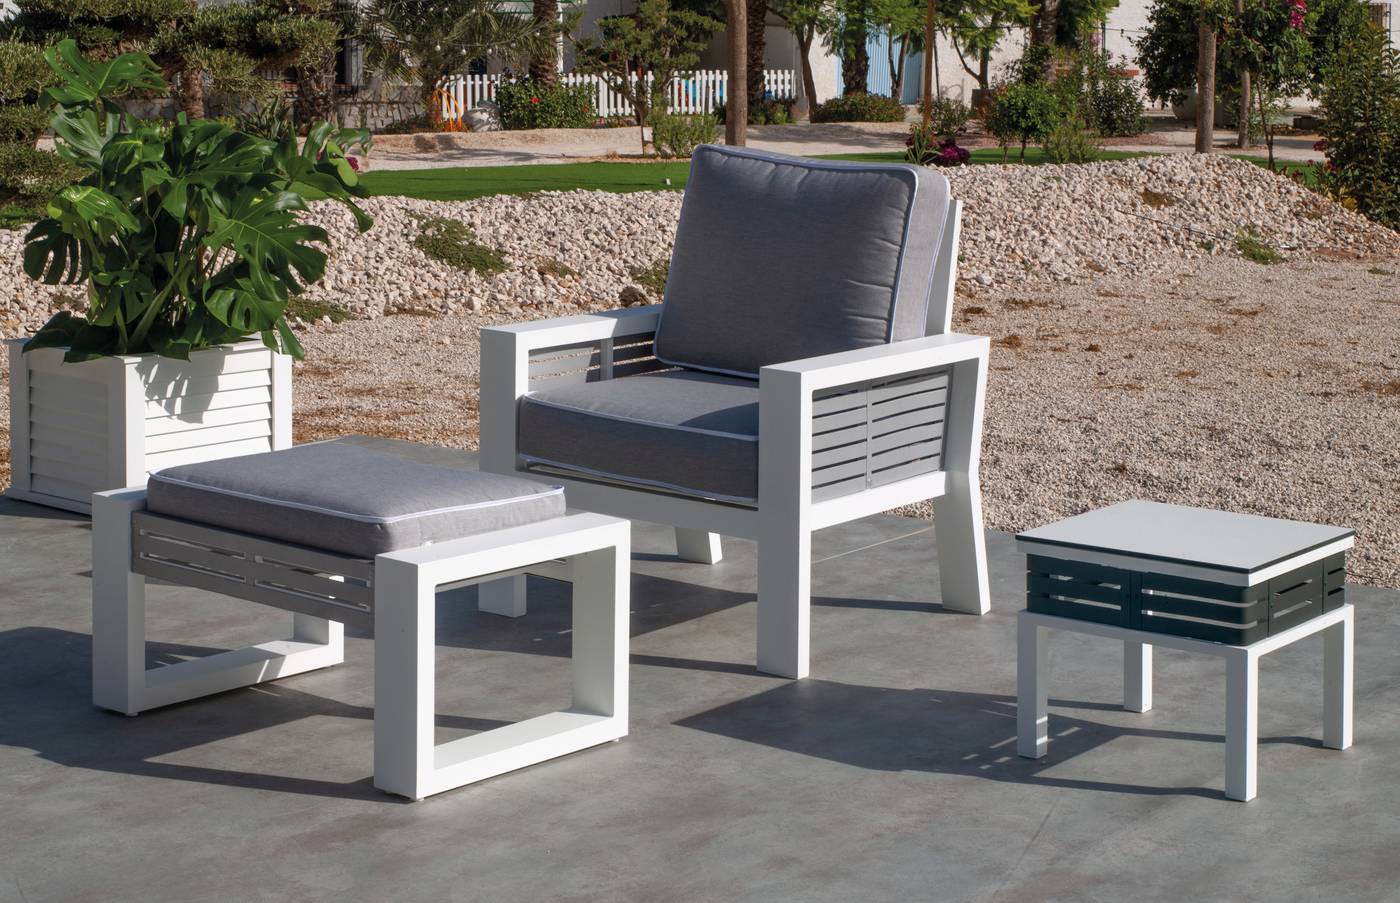 Taburete Luxe Alumino Gala-5 - Exclusivo taburete/reposapiés de aluminio bicolor para jardín o terraza.